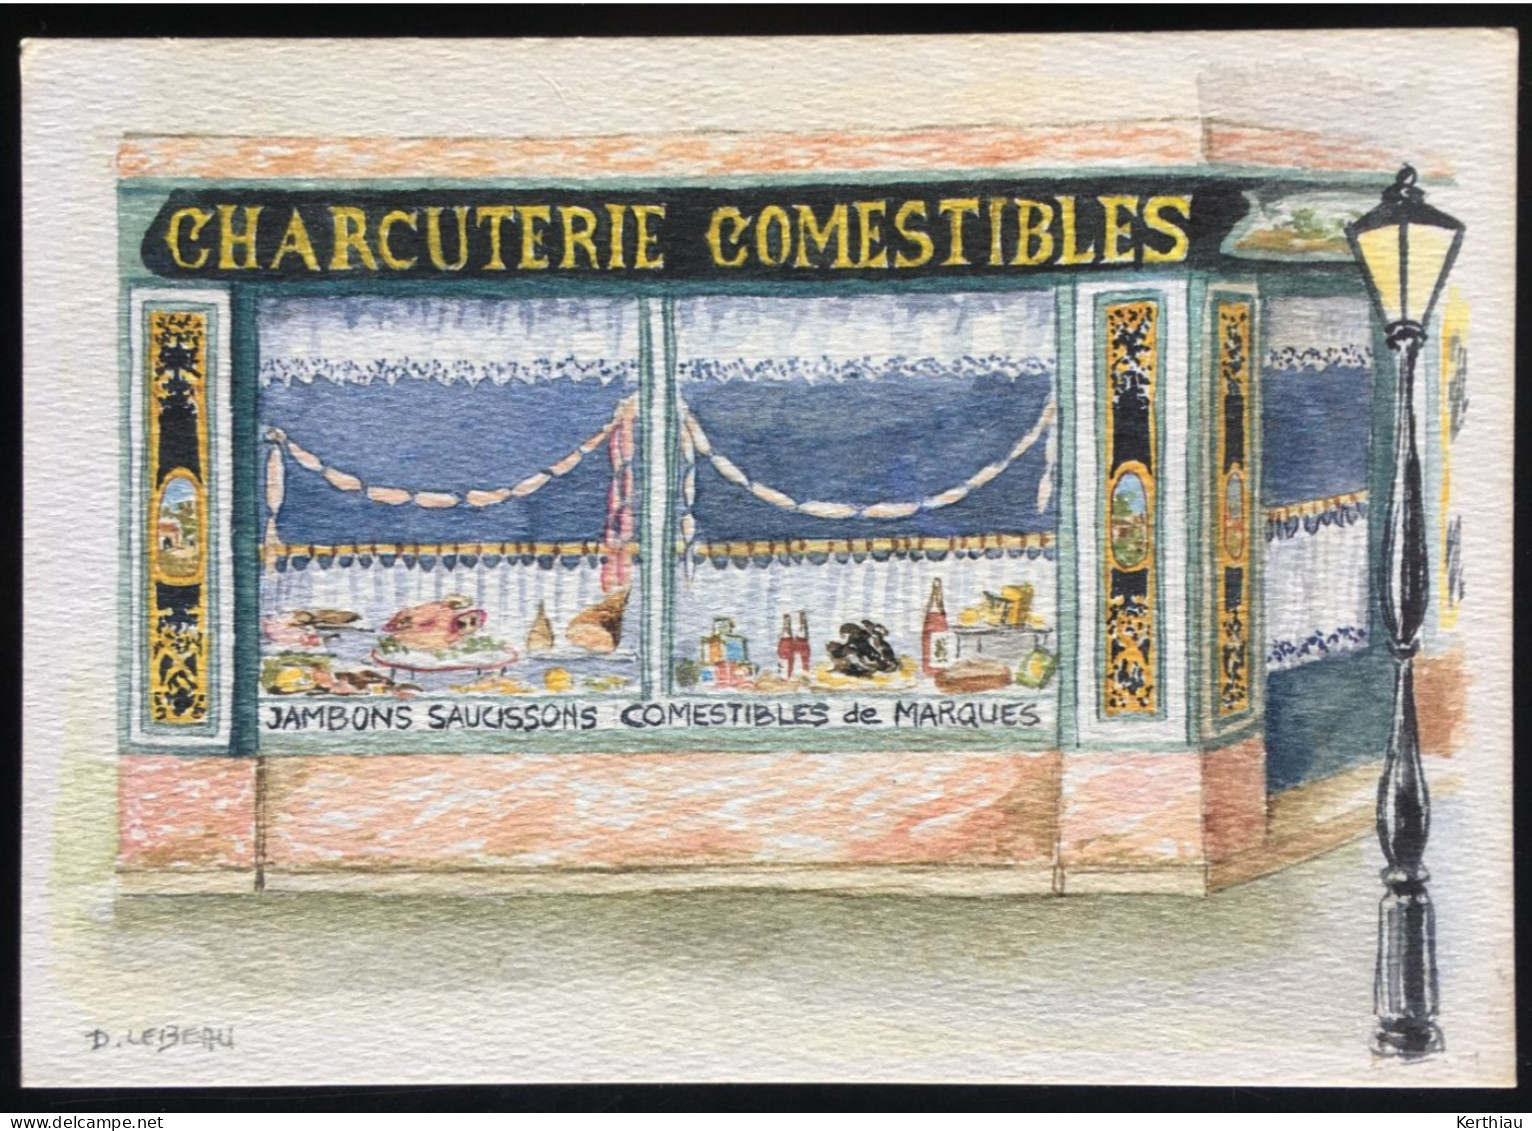 10 cartes 10 x 15 aquarelles de D. Lebeau, dix commerces différents. Non circulées